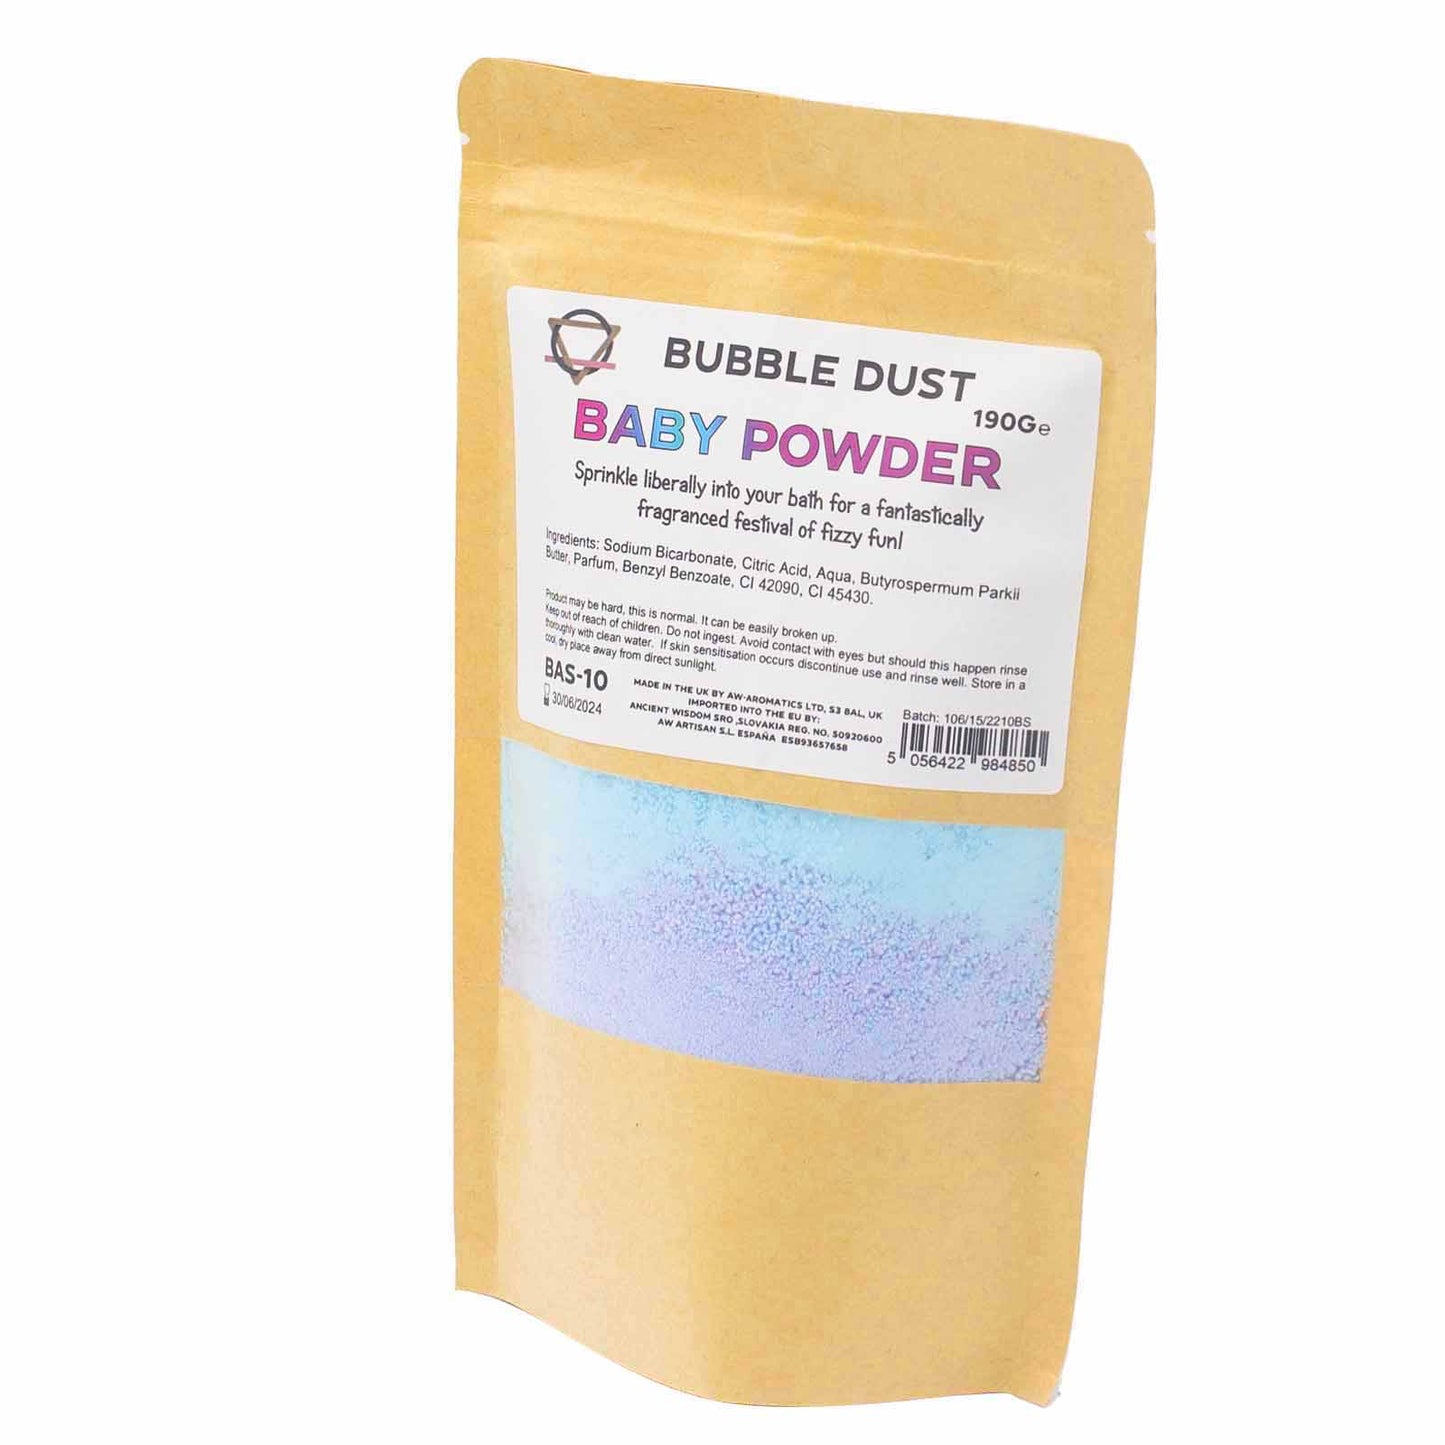 Bath bomb dust